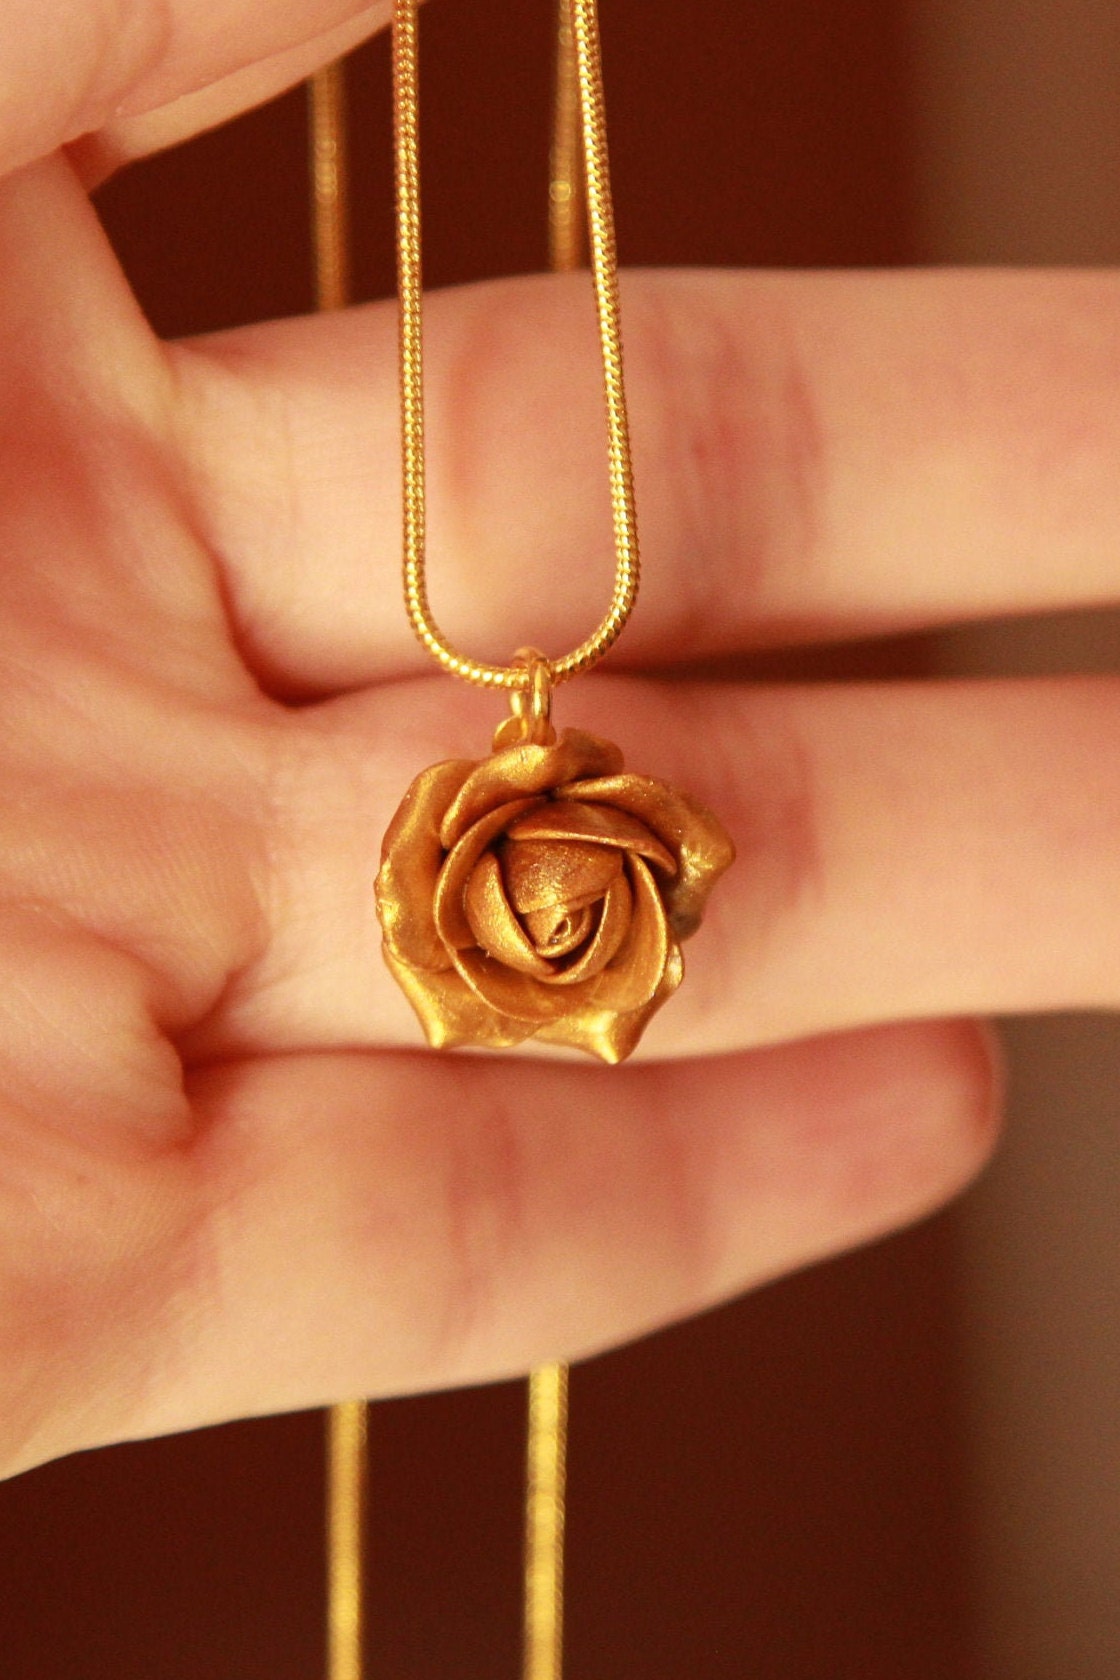 Gold rose pendant necklace Gold snake chain pendant Polymer | Etsy